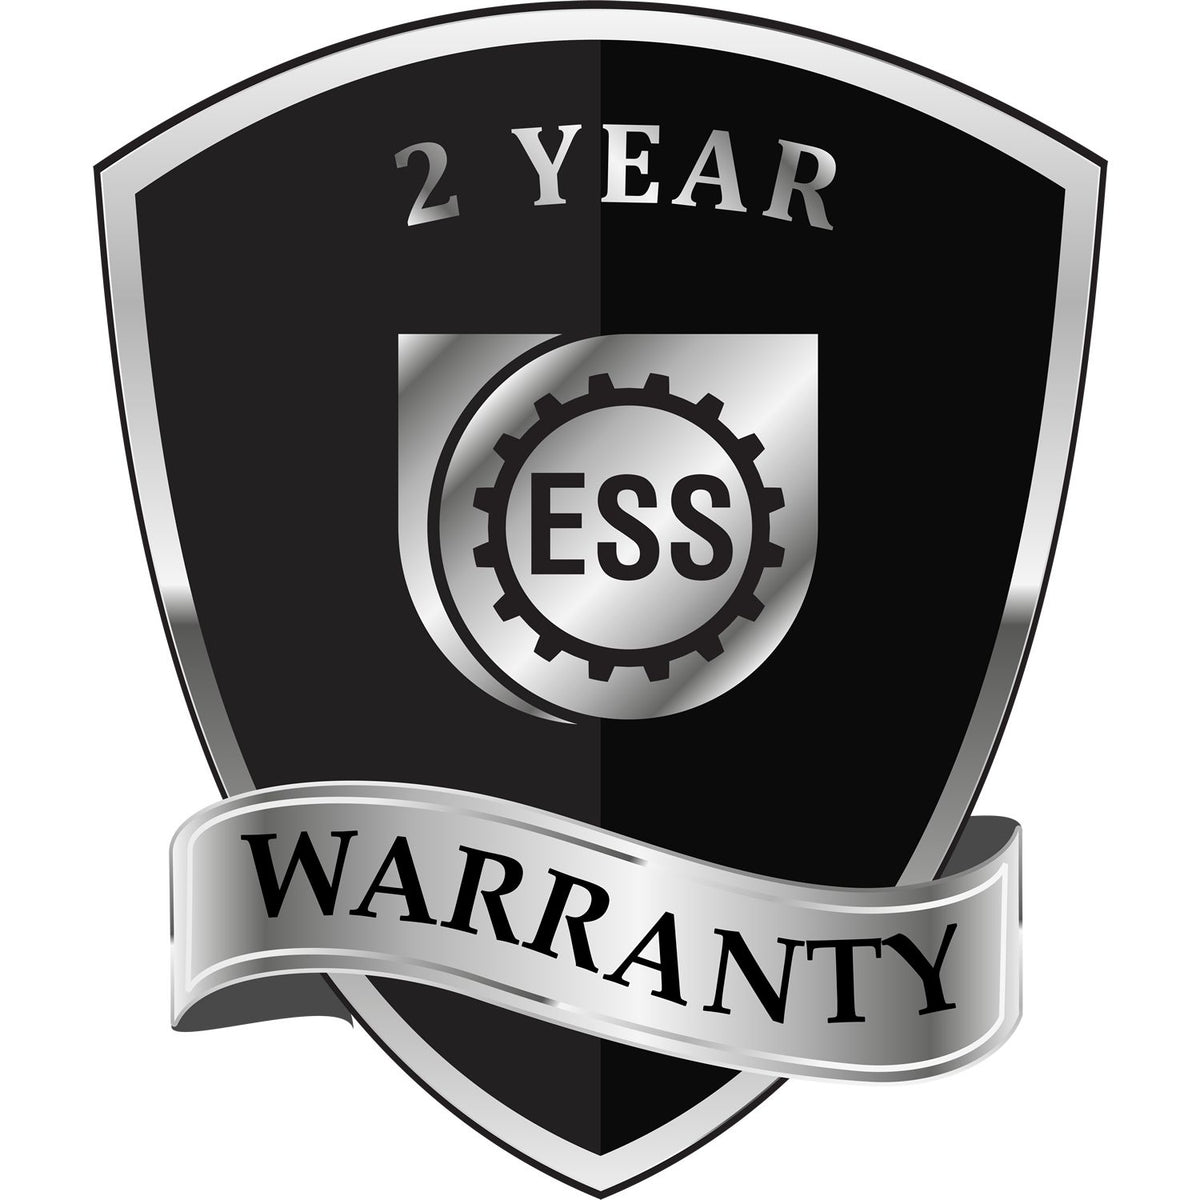 A black and silver badge or emblem showing warranty information for the Hybrid Connecticut Land Surveyor Seal